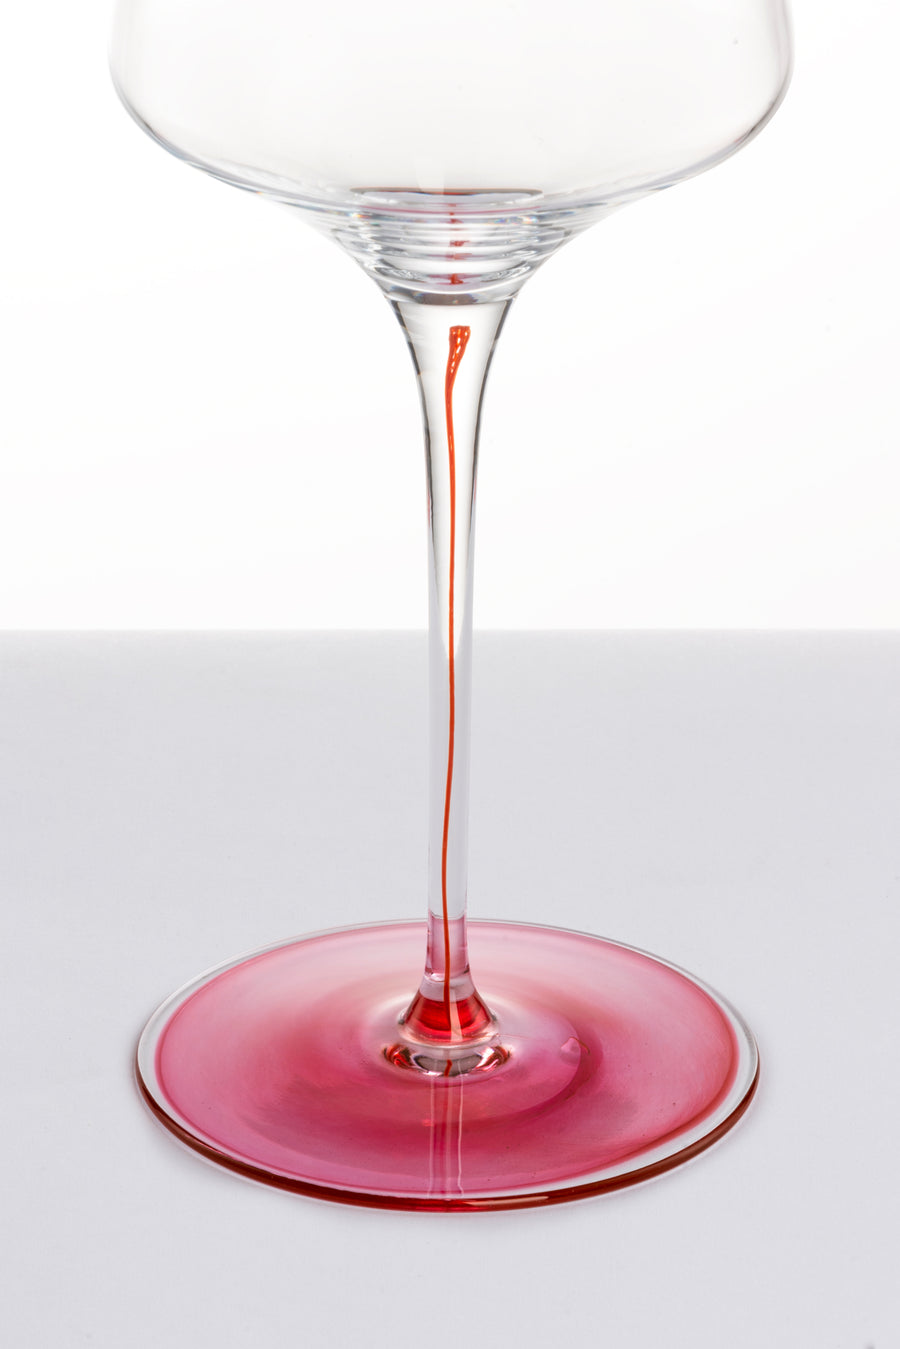 ZWIESEL GLAS | Ink White Wine Glass, Antique Red